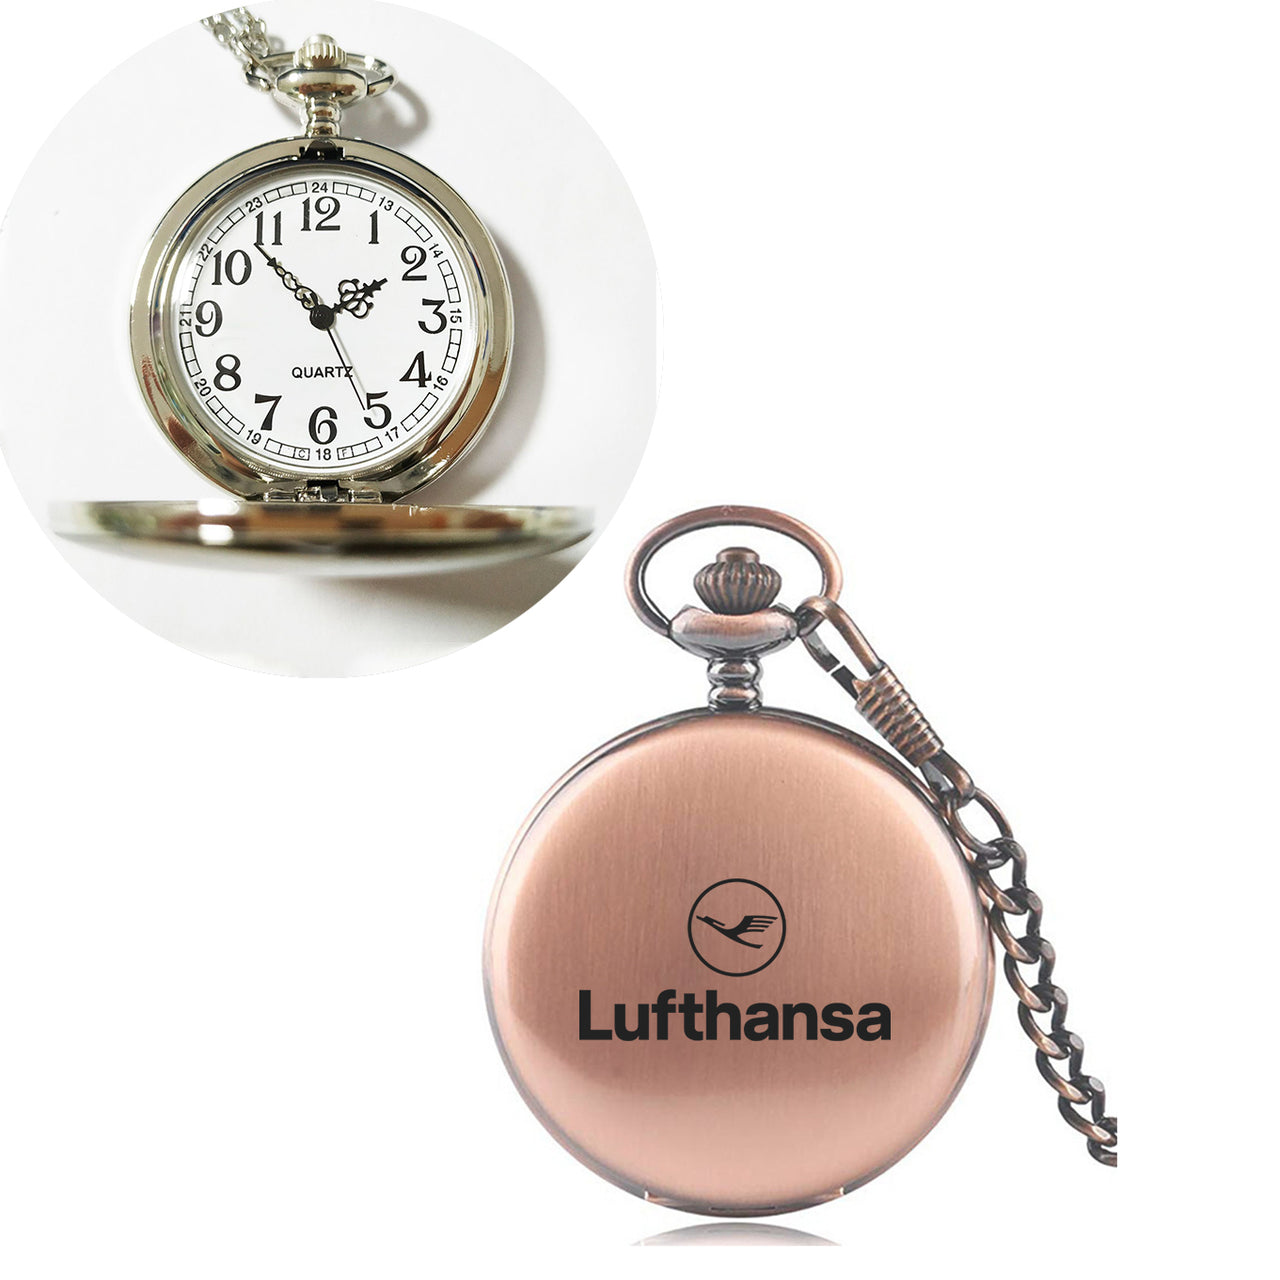 Lufthansa Airlines Designed Pocket Watches